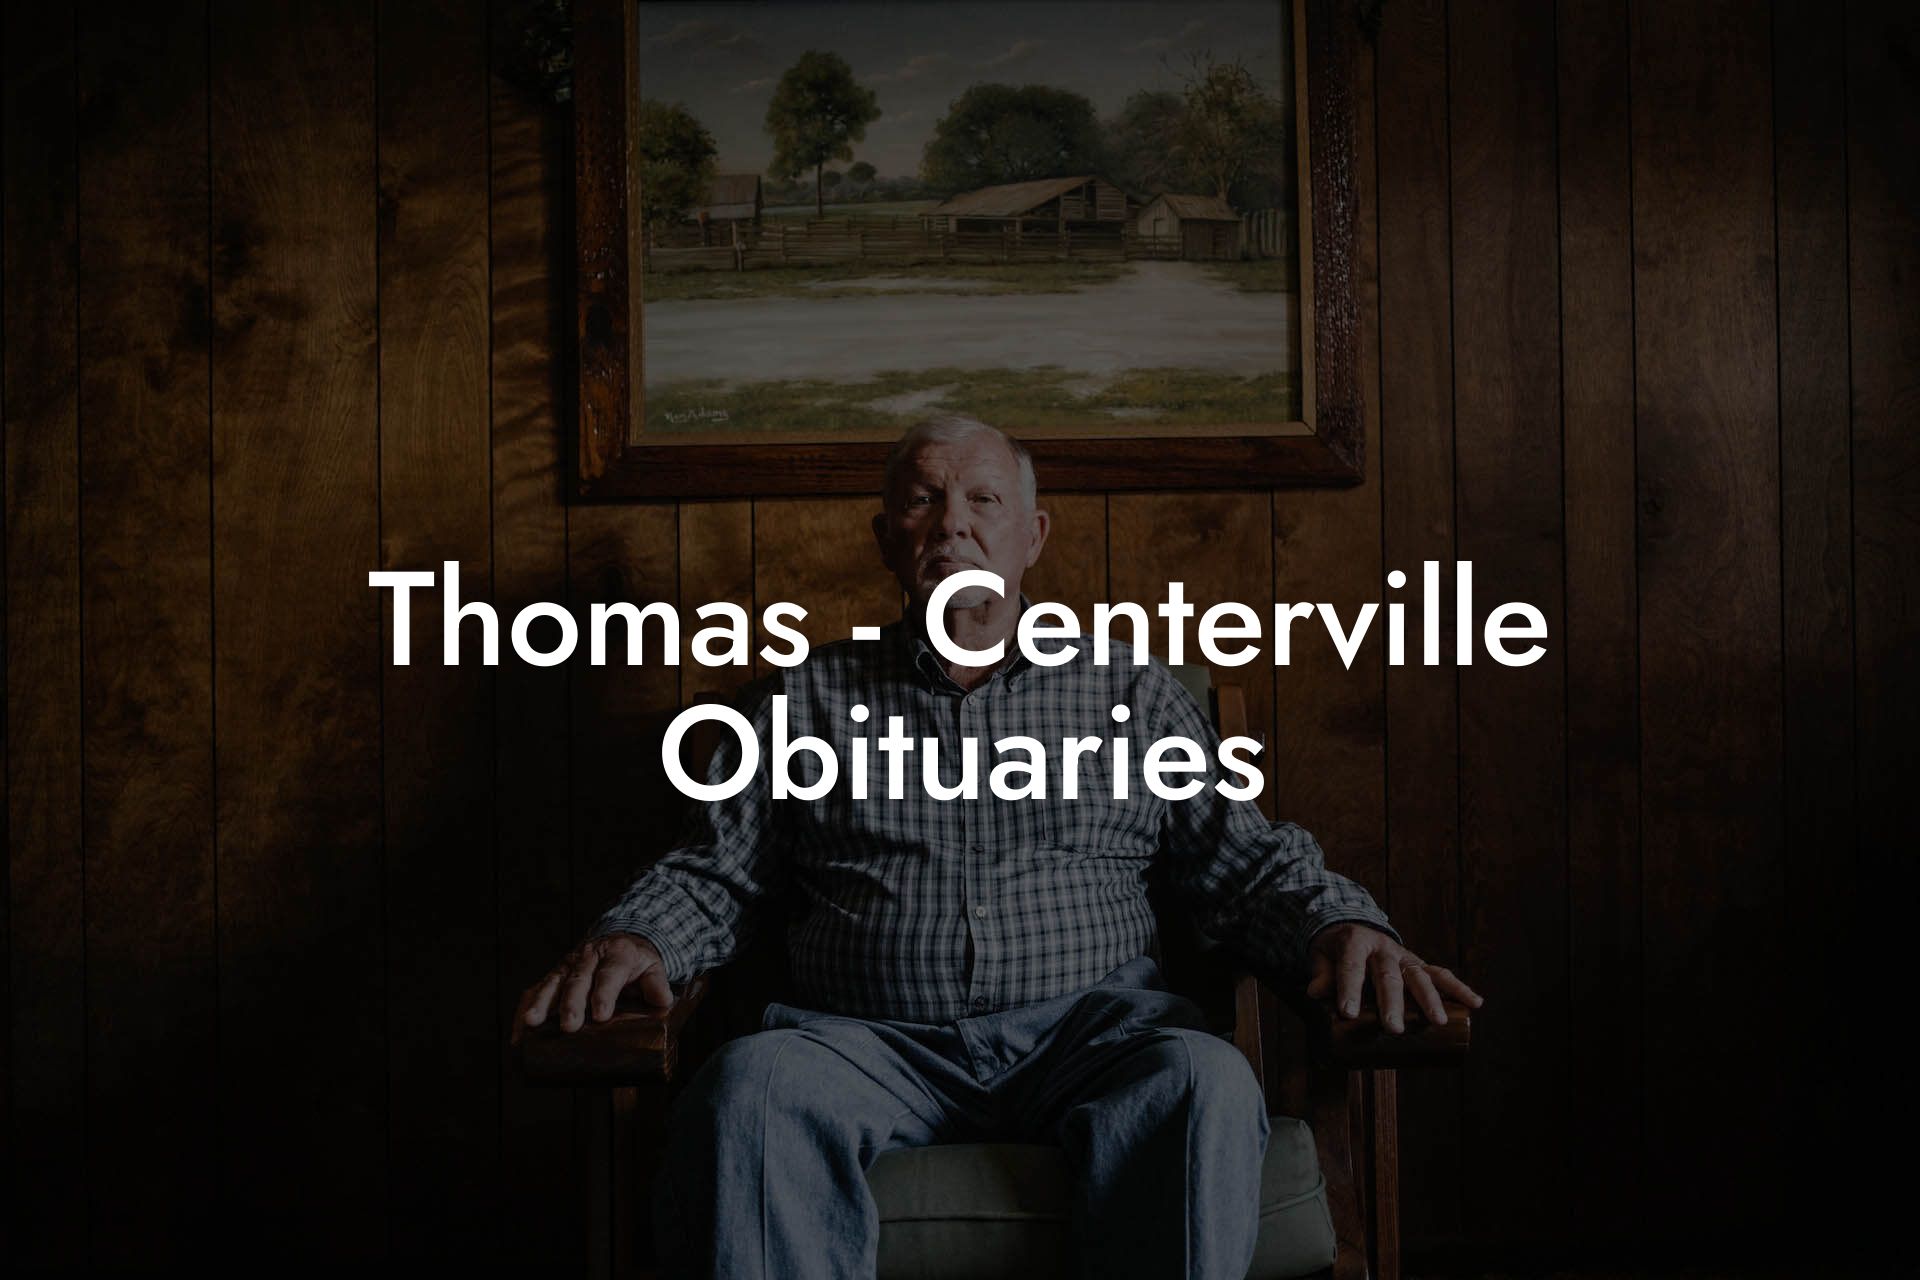 Thomas - Centerville Obituaries